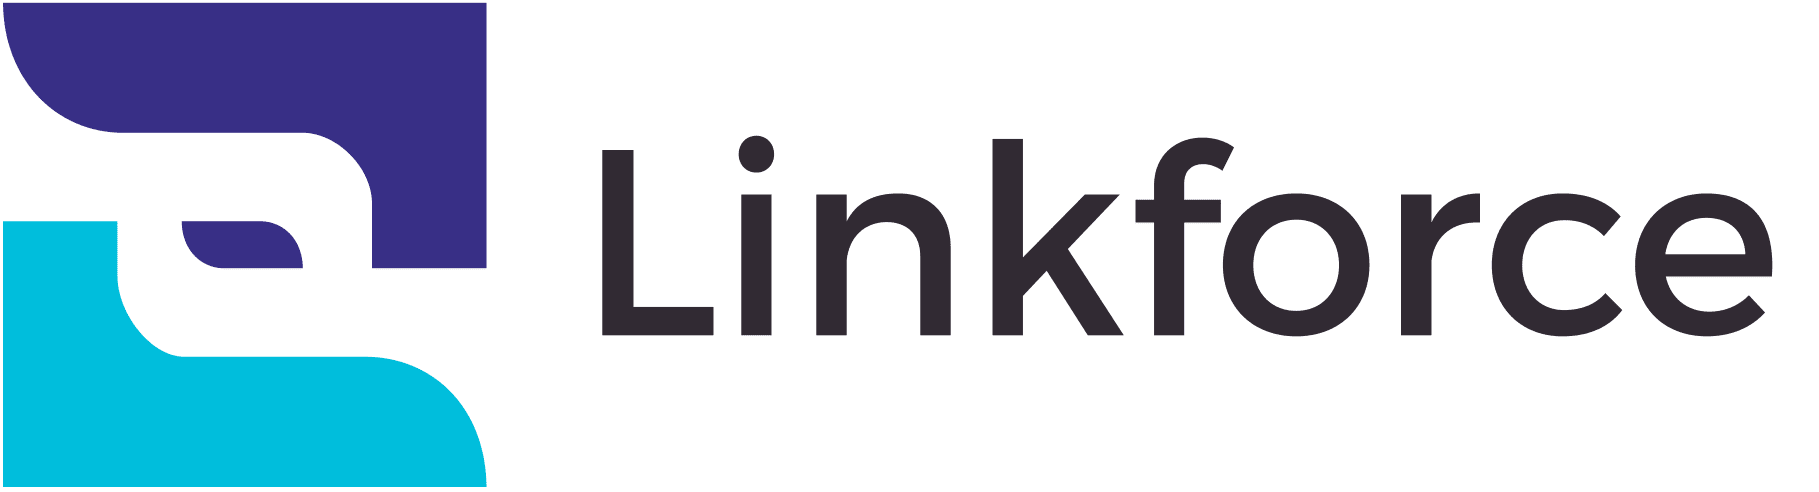 Linkforce: Brand Short Description Type Here.